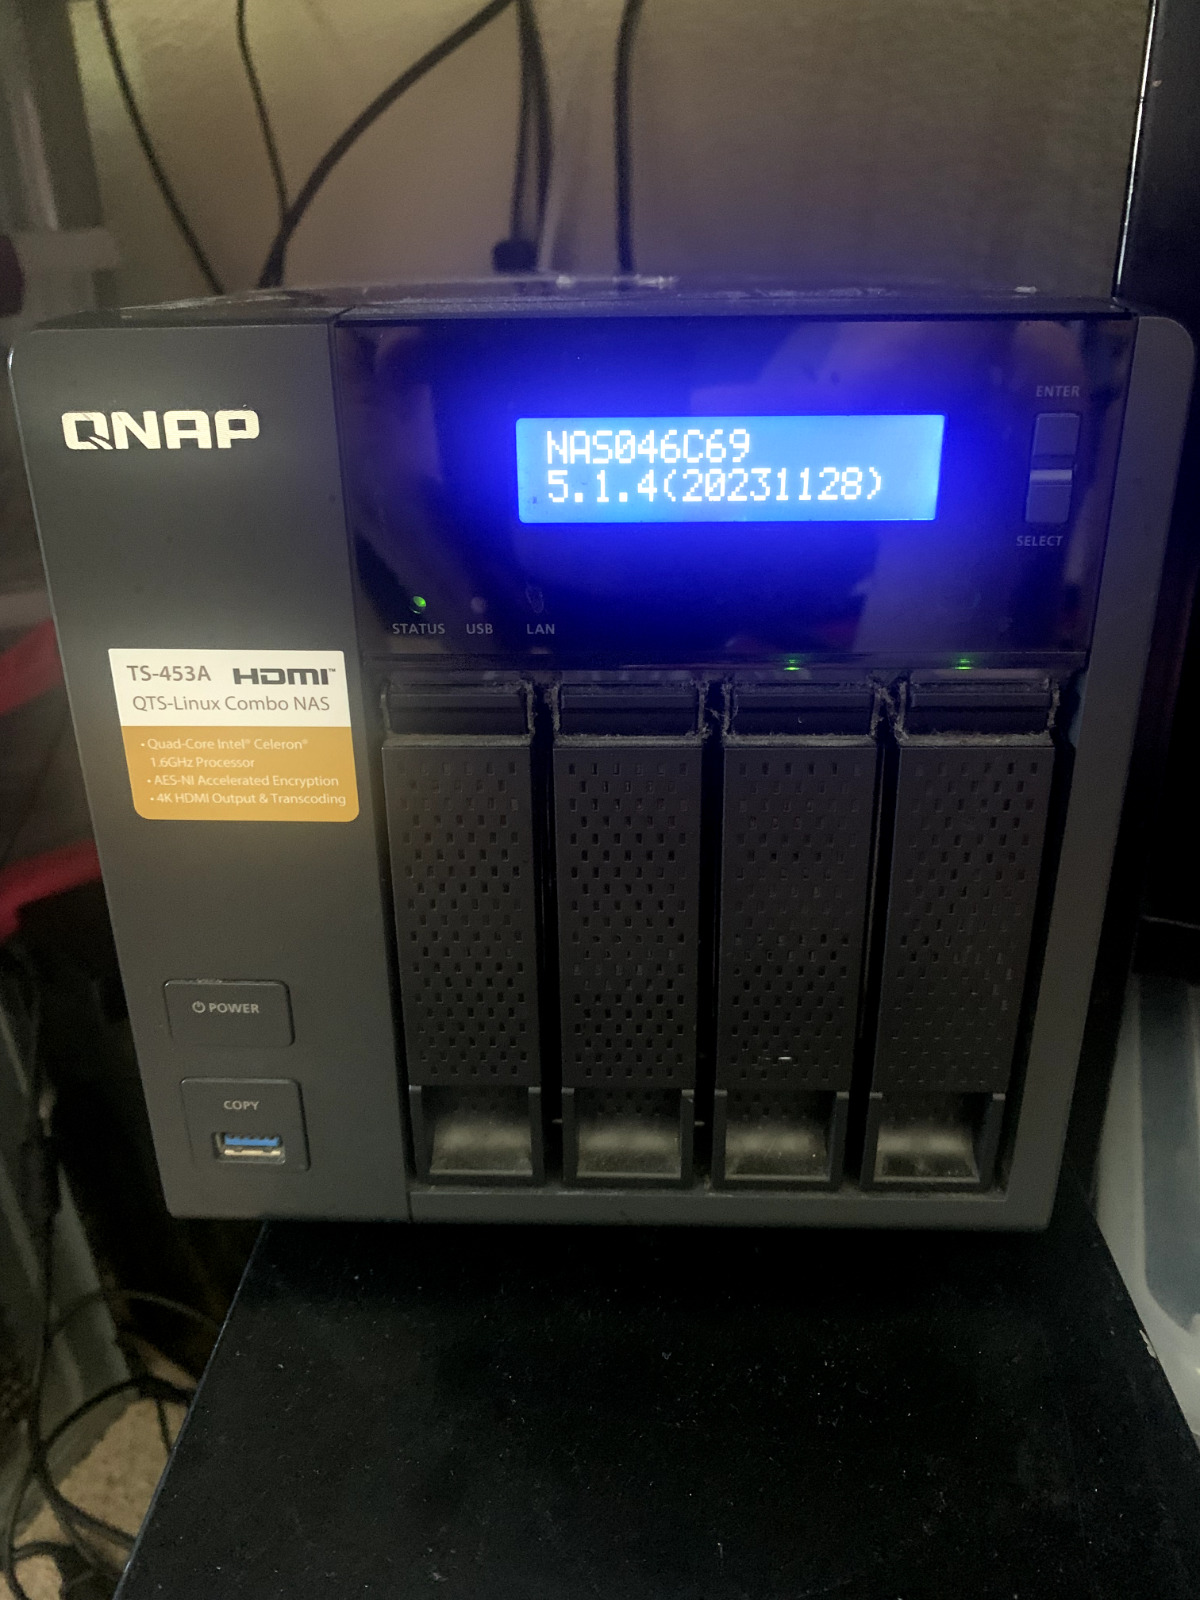 QNAP TS-453A QTS-Linux Combo NAS + 4x 3TB Seagate Drives (12 TB total storage)